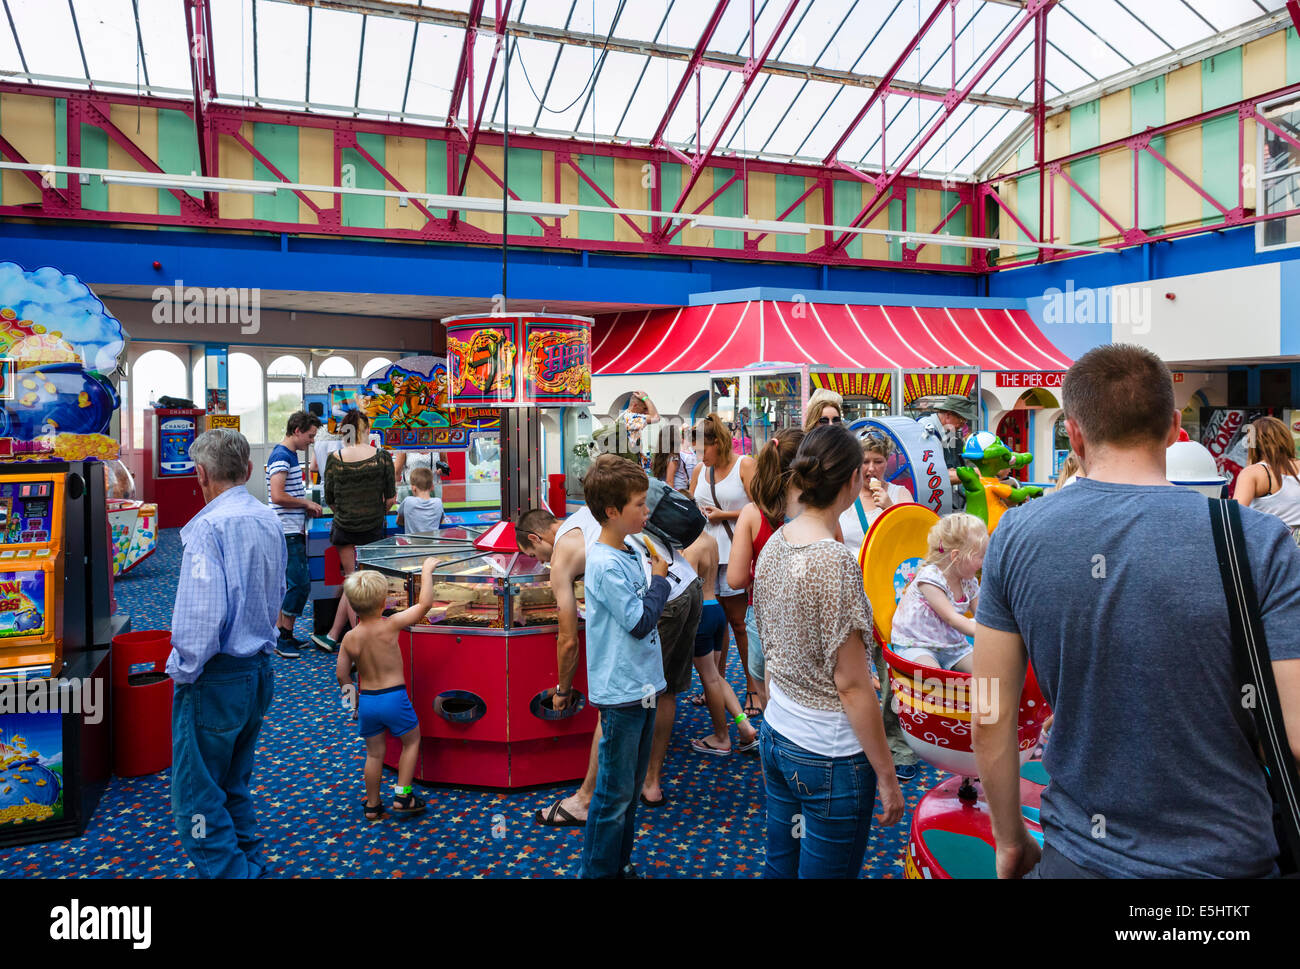 Interior of an amusement arcade on the pier in St Anne's, Lytham St Annes, Fylde Coast, Lancashire, UK Stock Photo